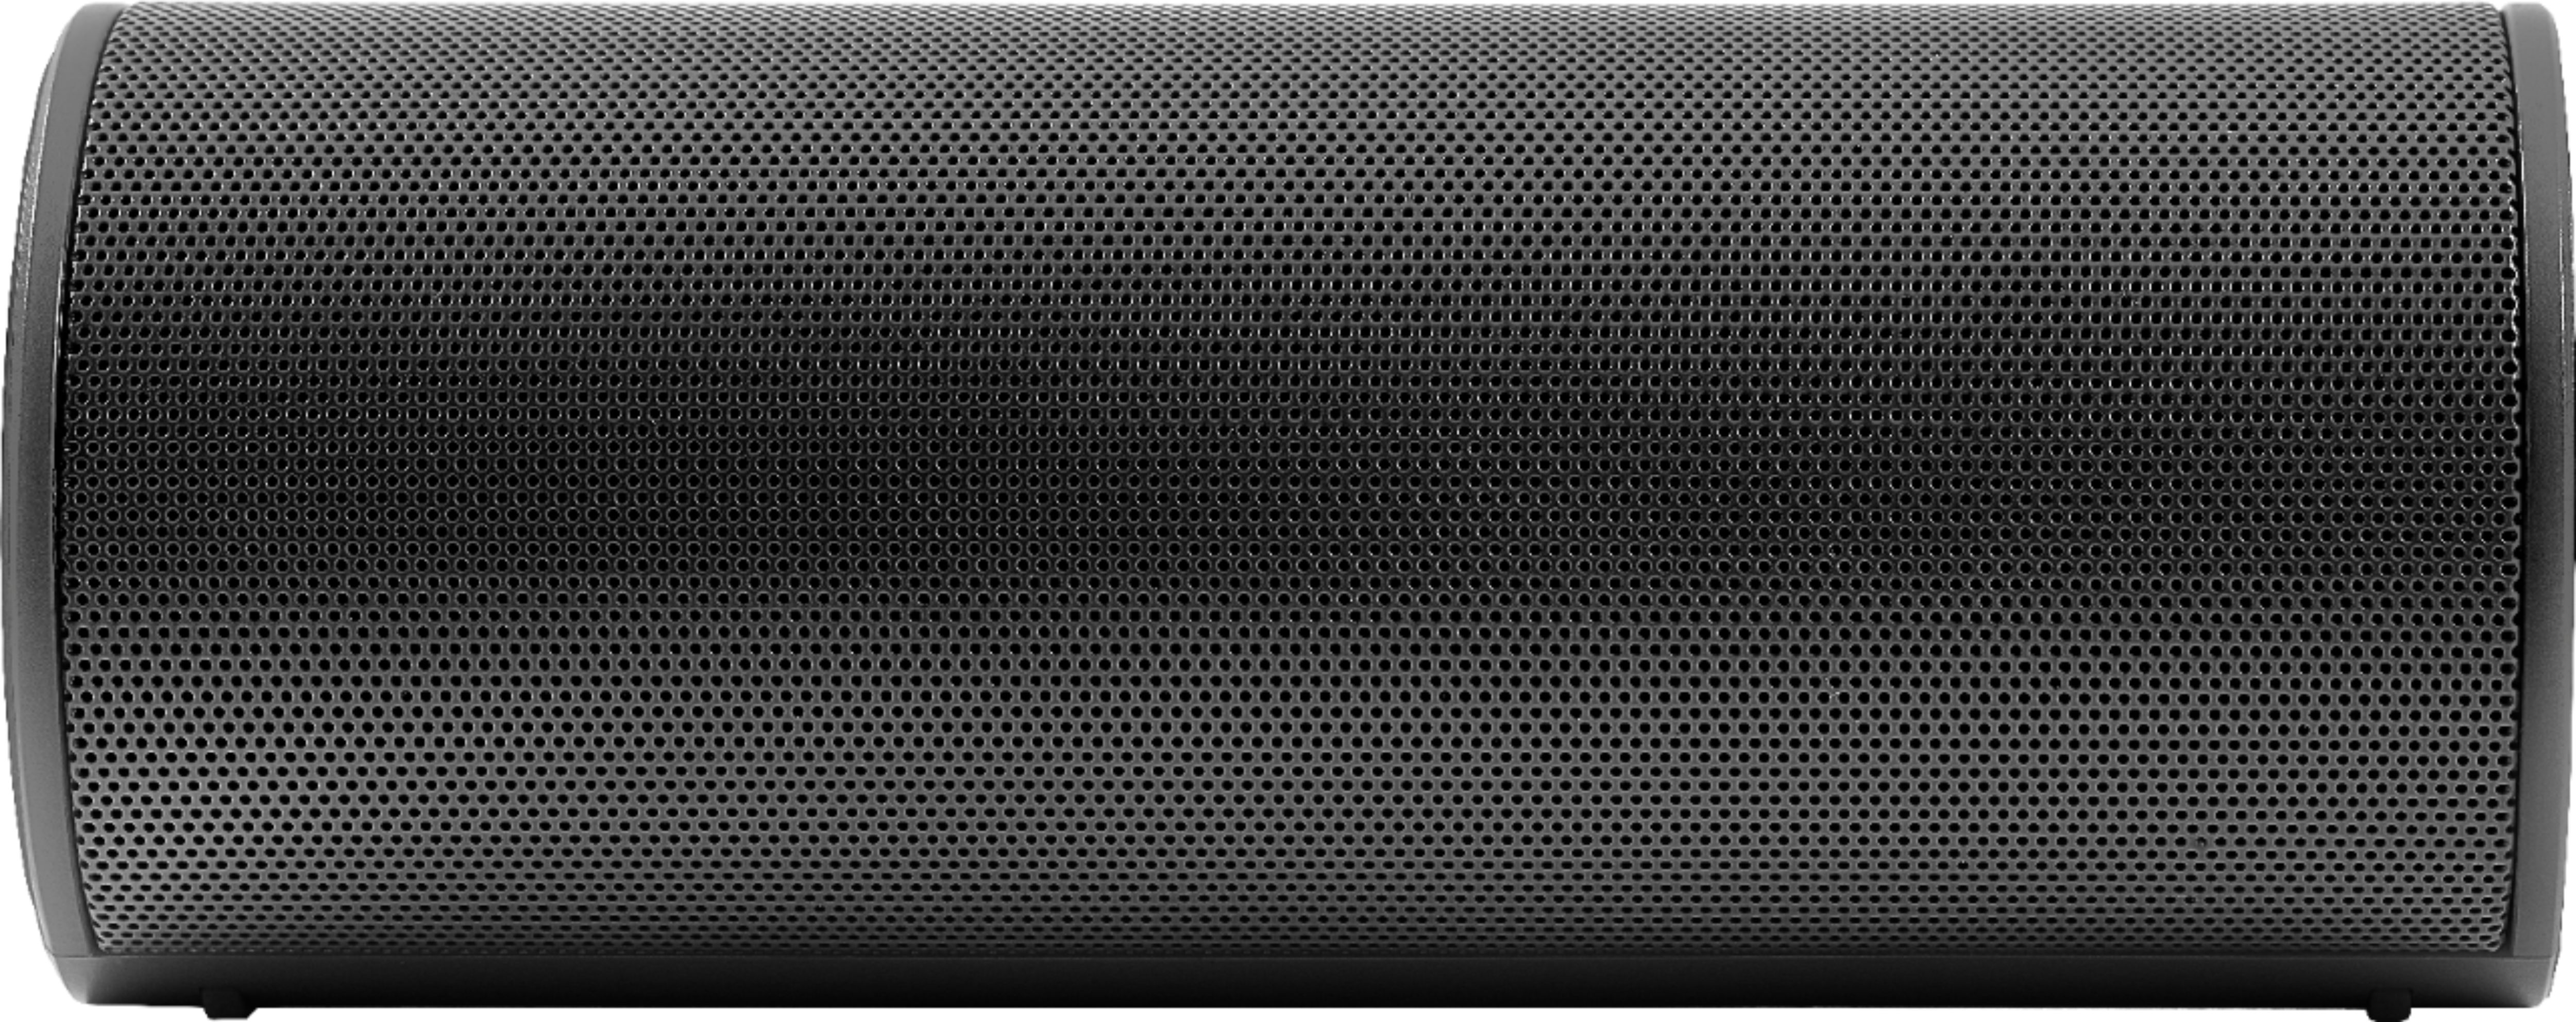 WAVE 2 Portable Bluetooth Speaker Black 